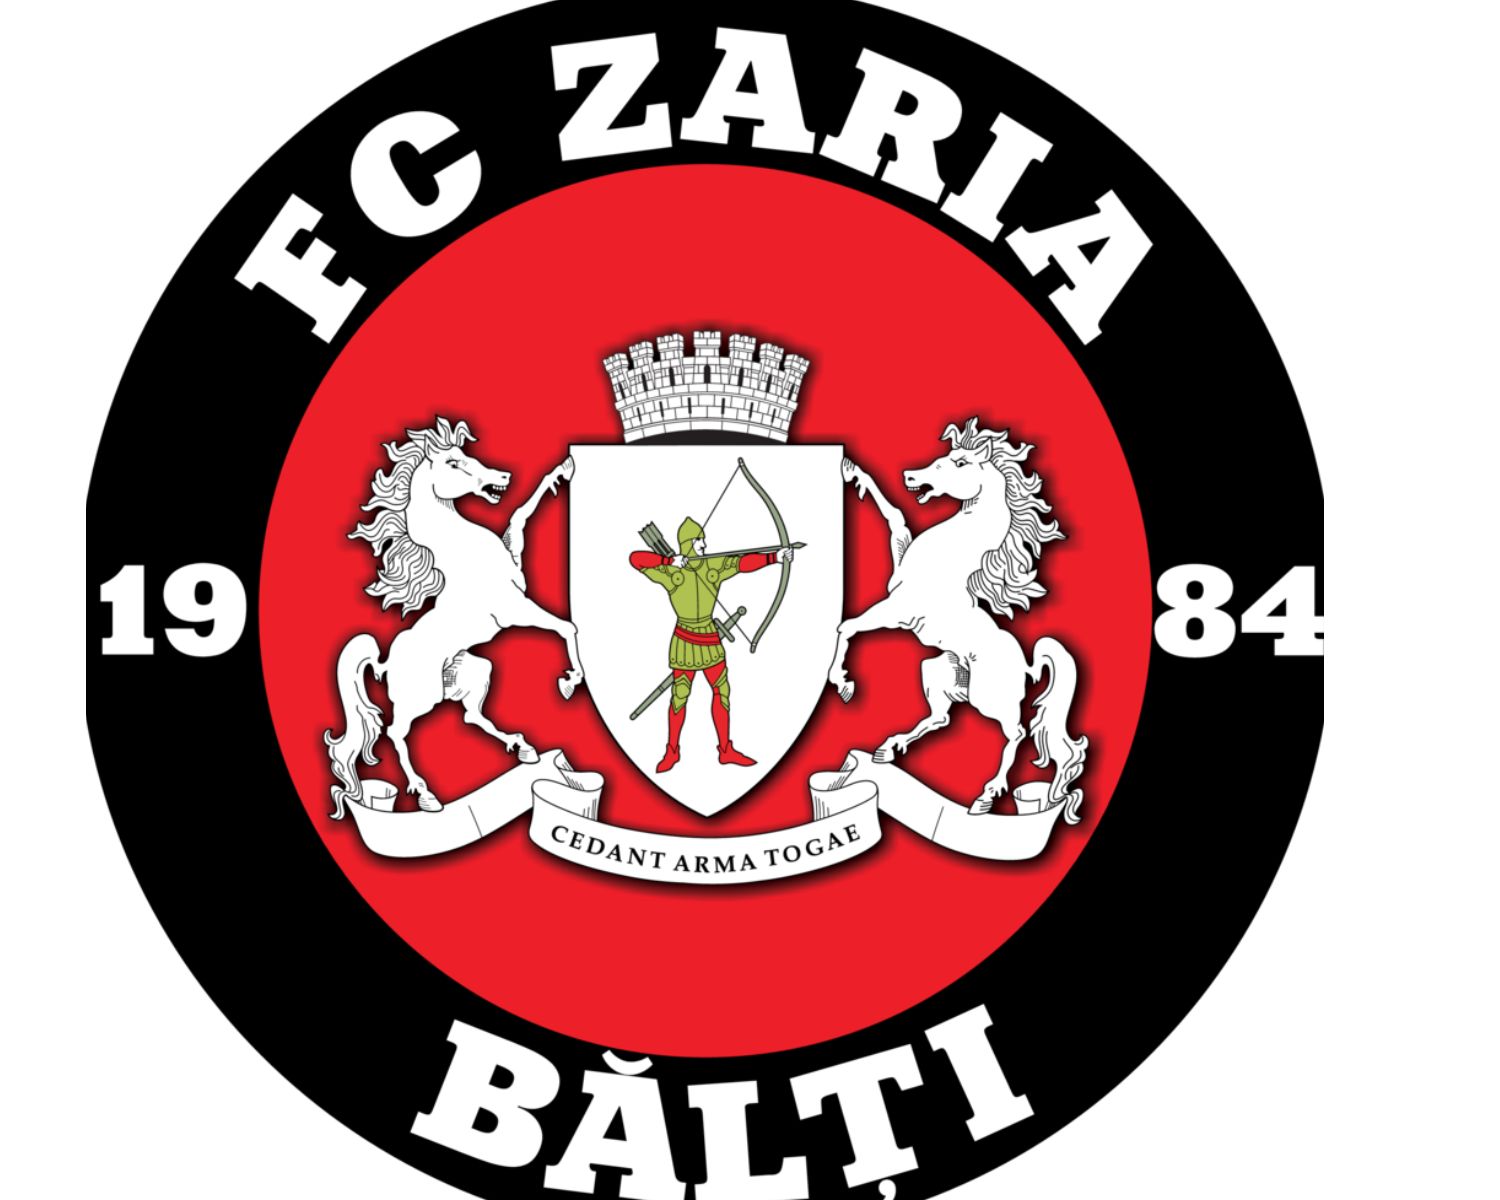 fc-zaria-balti-13-football-club-facts